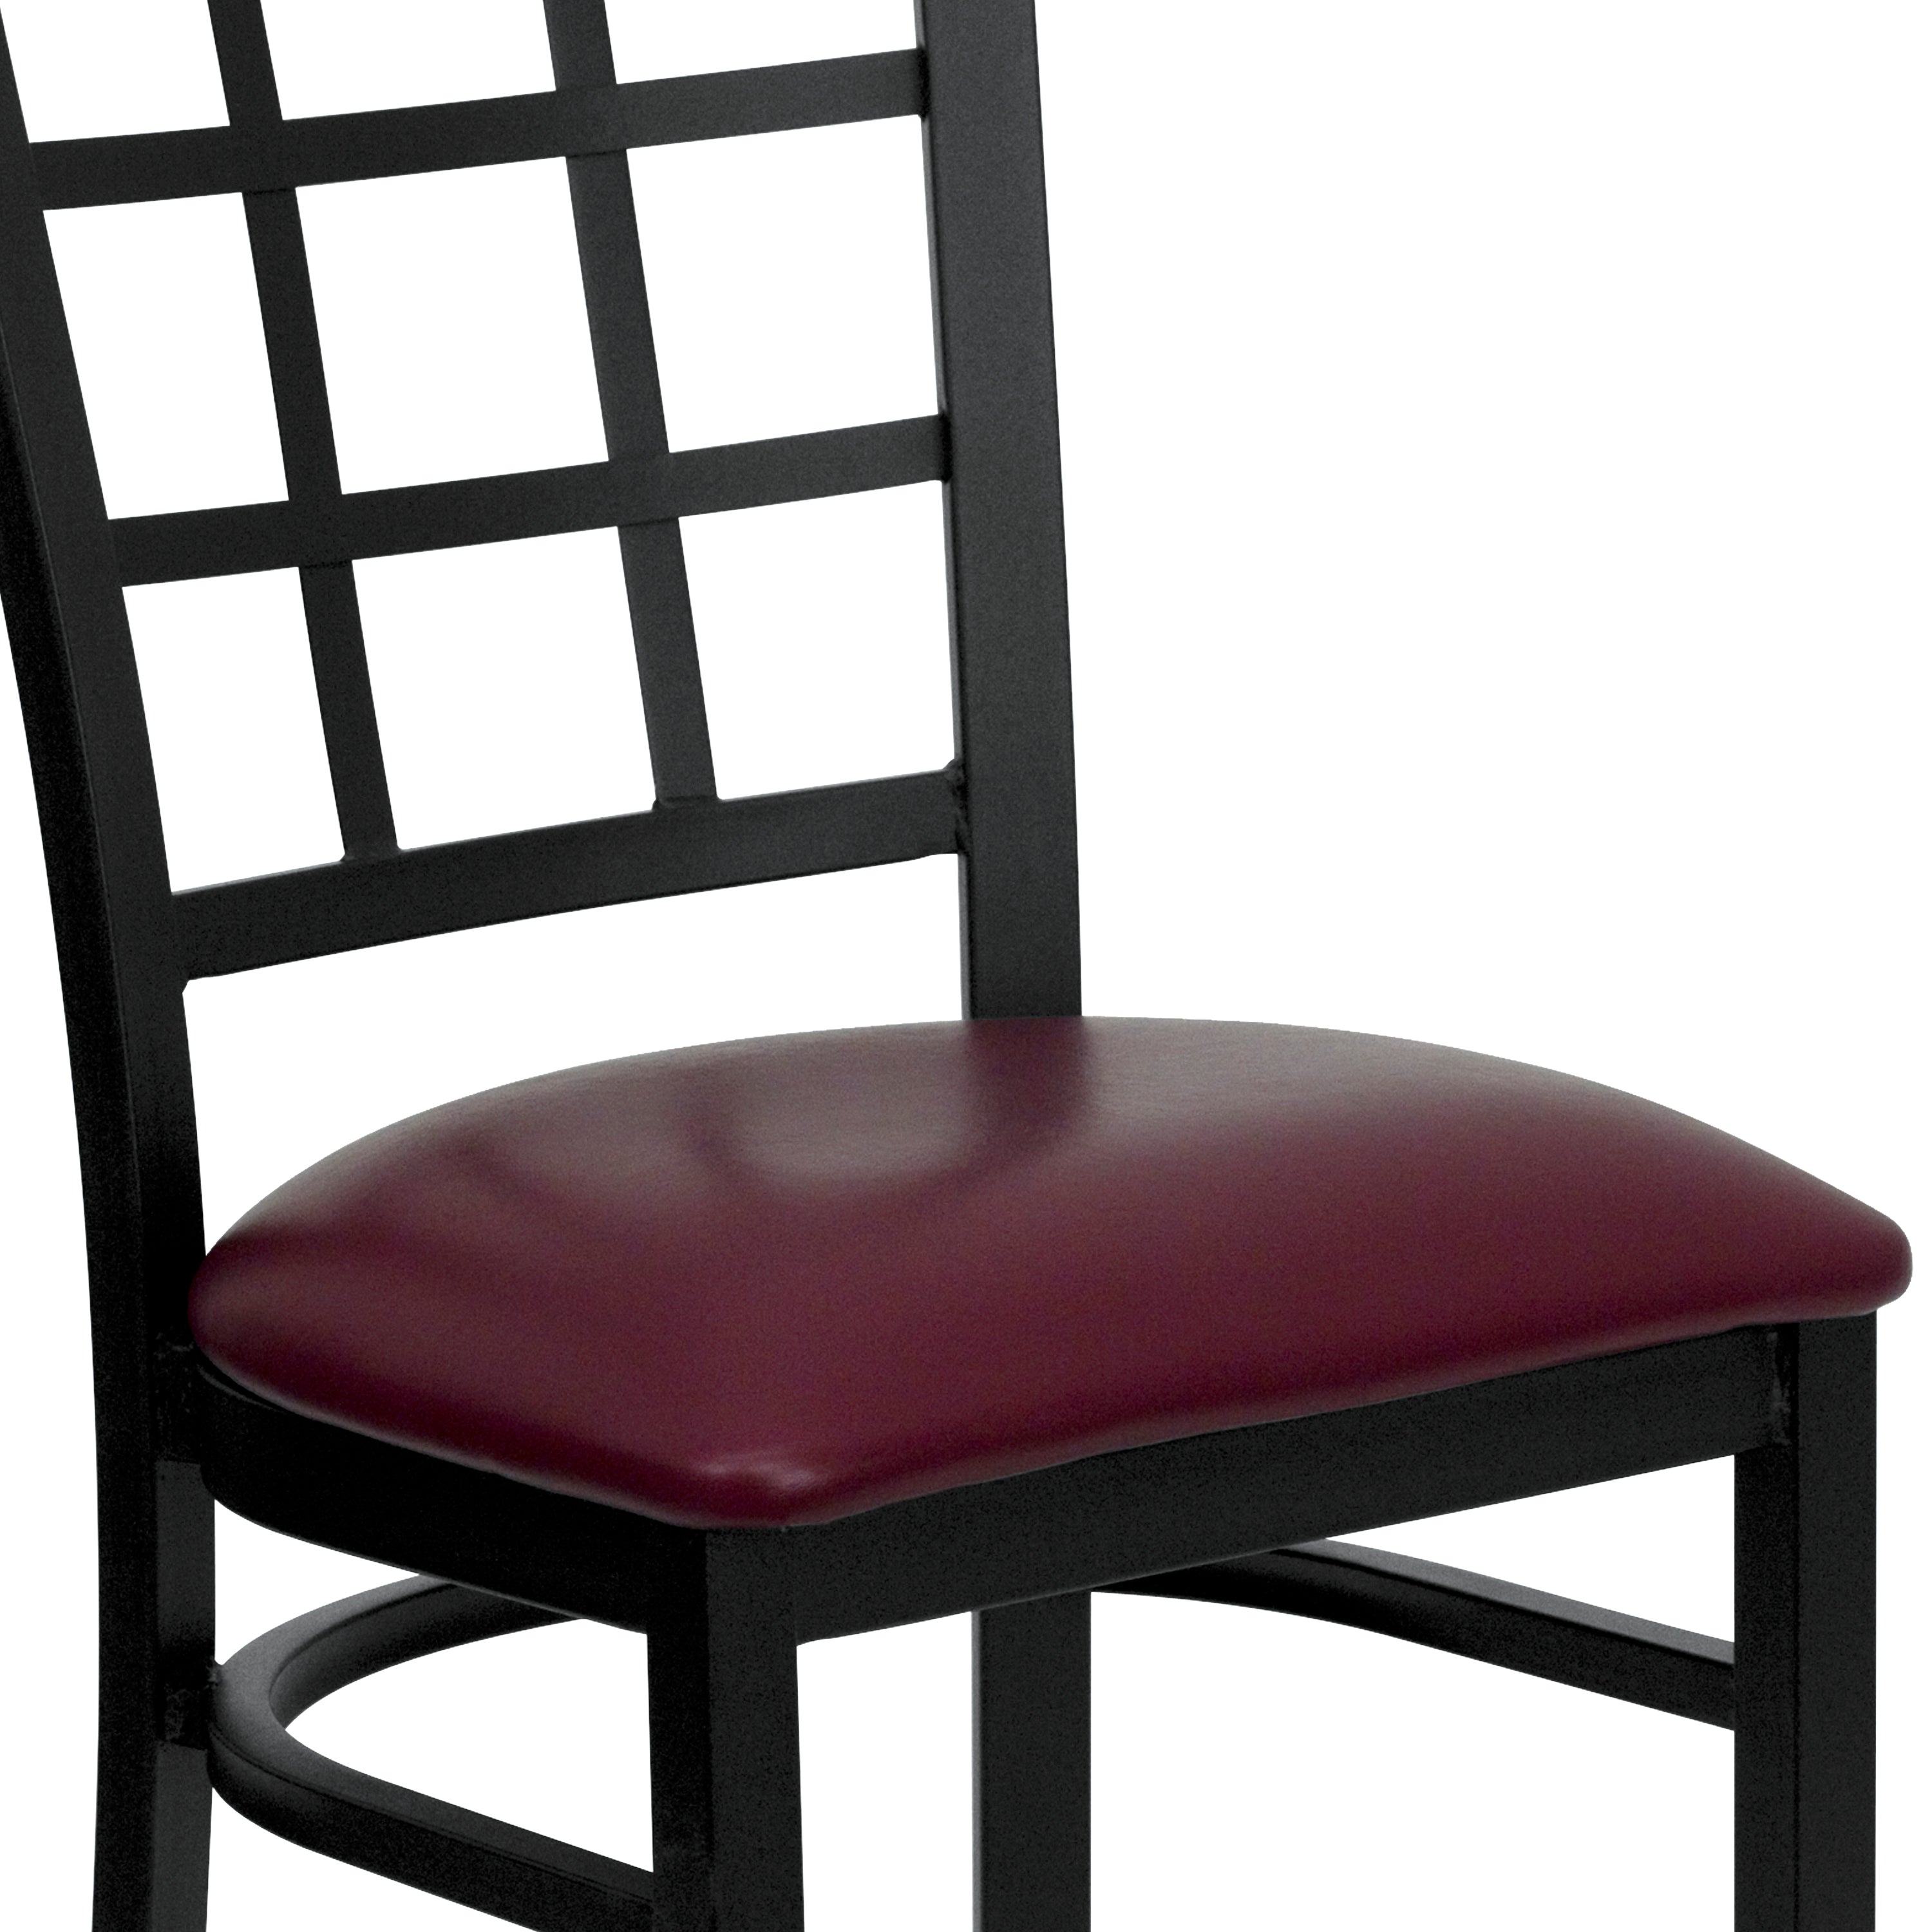 Window Back Metal Restaurant Chair-Metal Restaurant Chair-Flash Furniture-Wall2Wall Furnishings